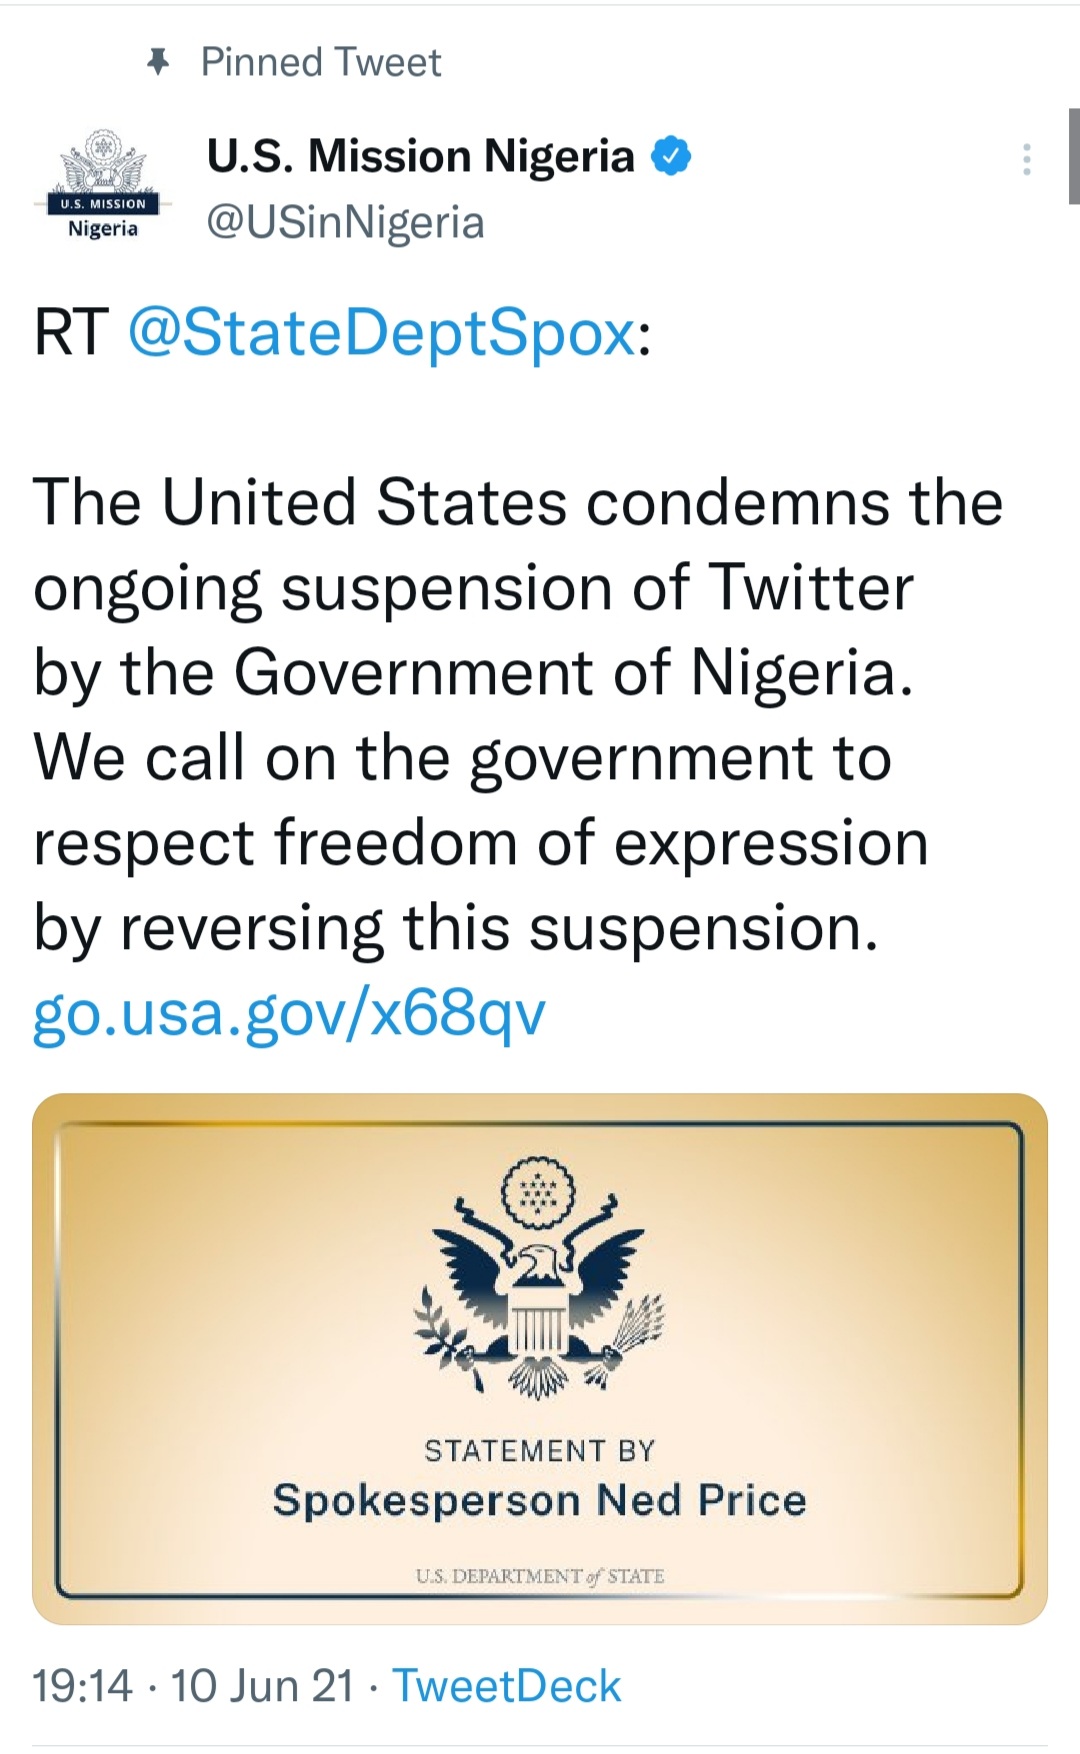 Pinned Tweet condemning Twitter Ban in Nigeria